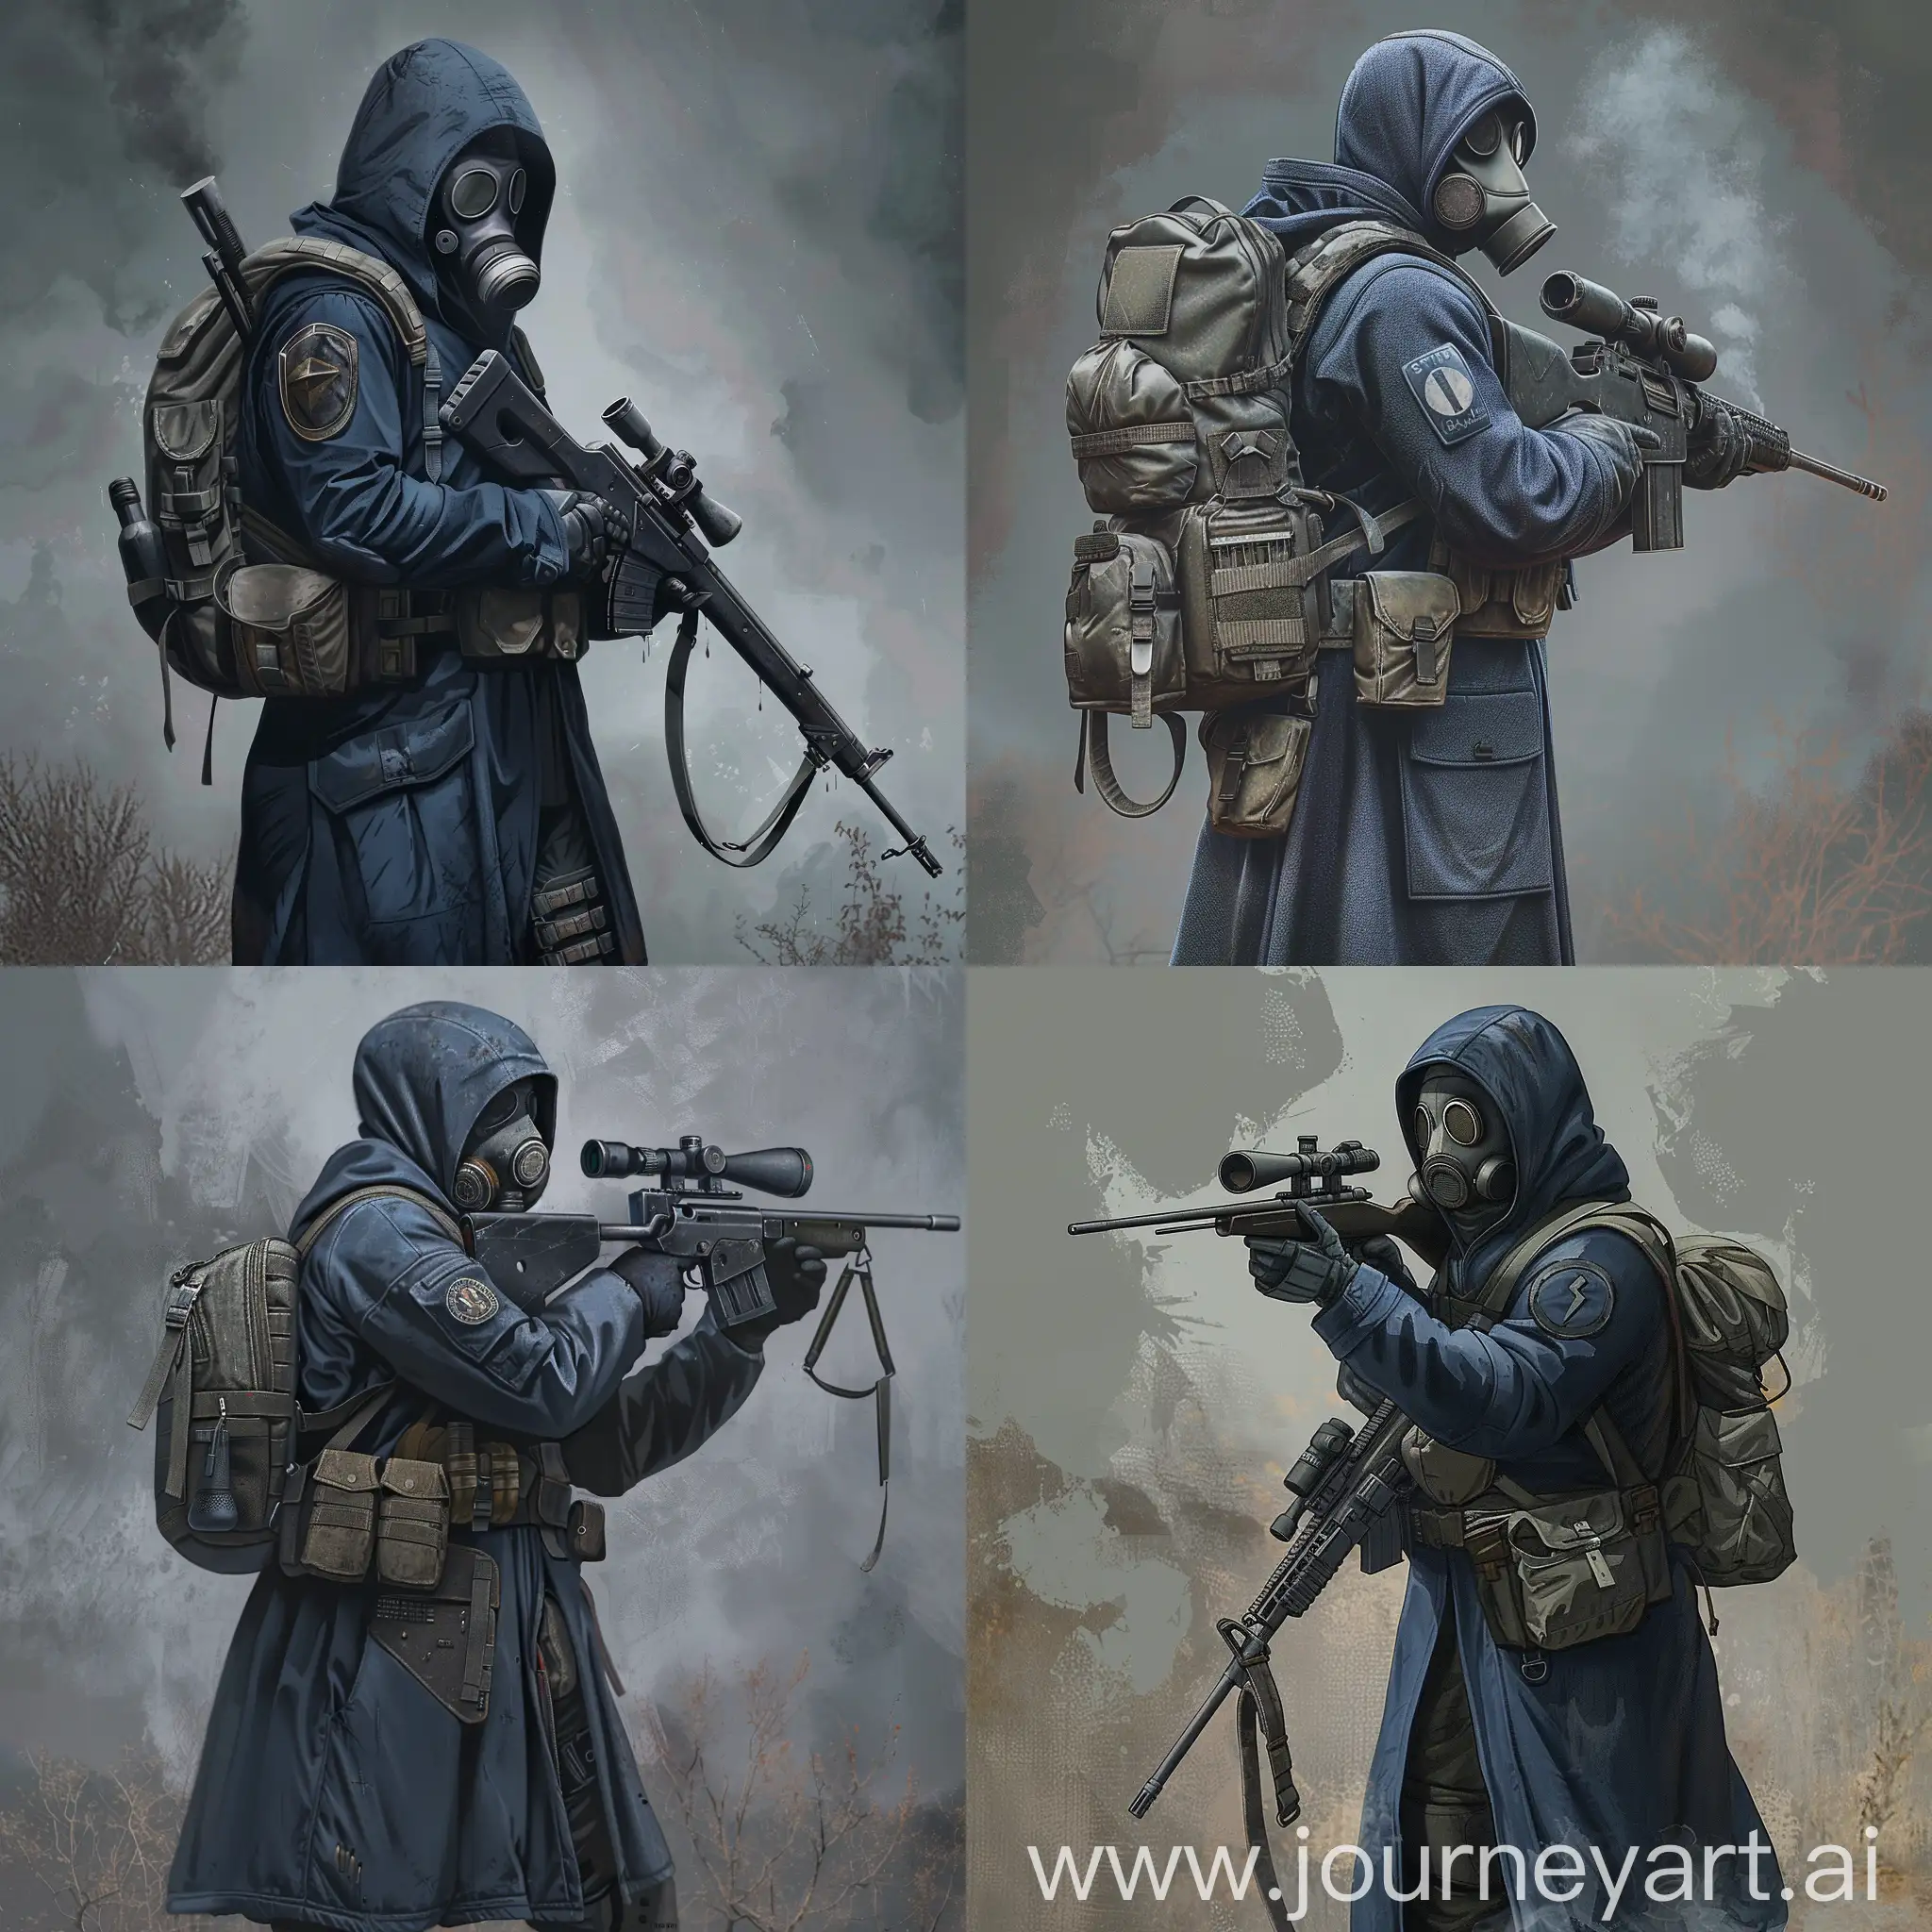 Mercenary-in-STALKER-Universe-Dark-Blue-Military-Raincoat-and-Sniper-Rifle